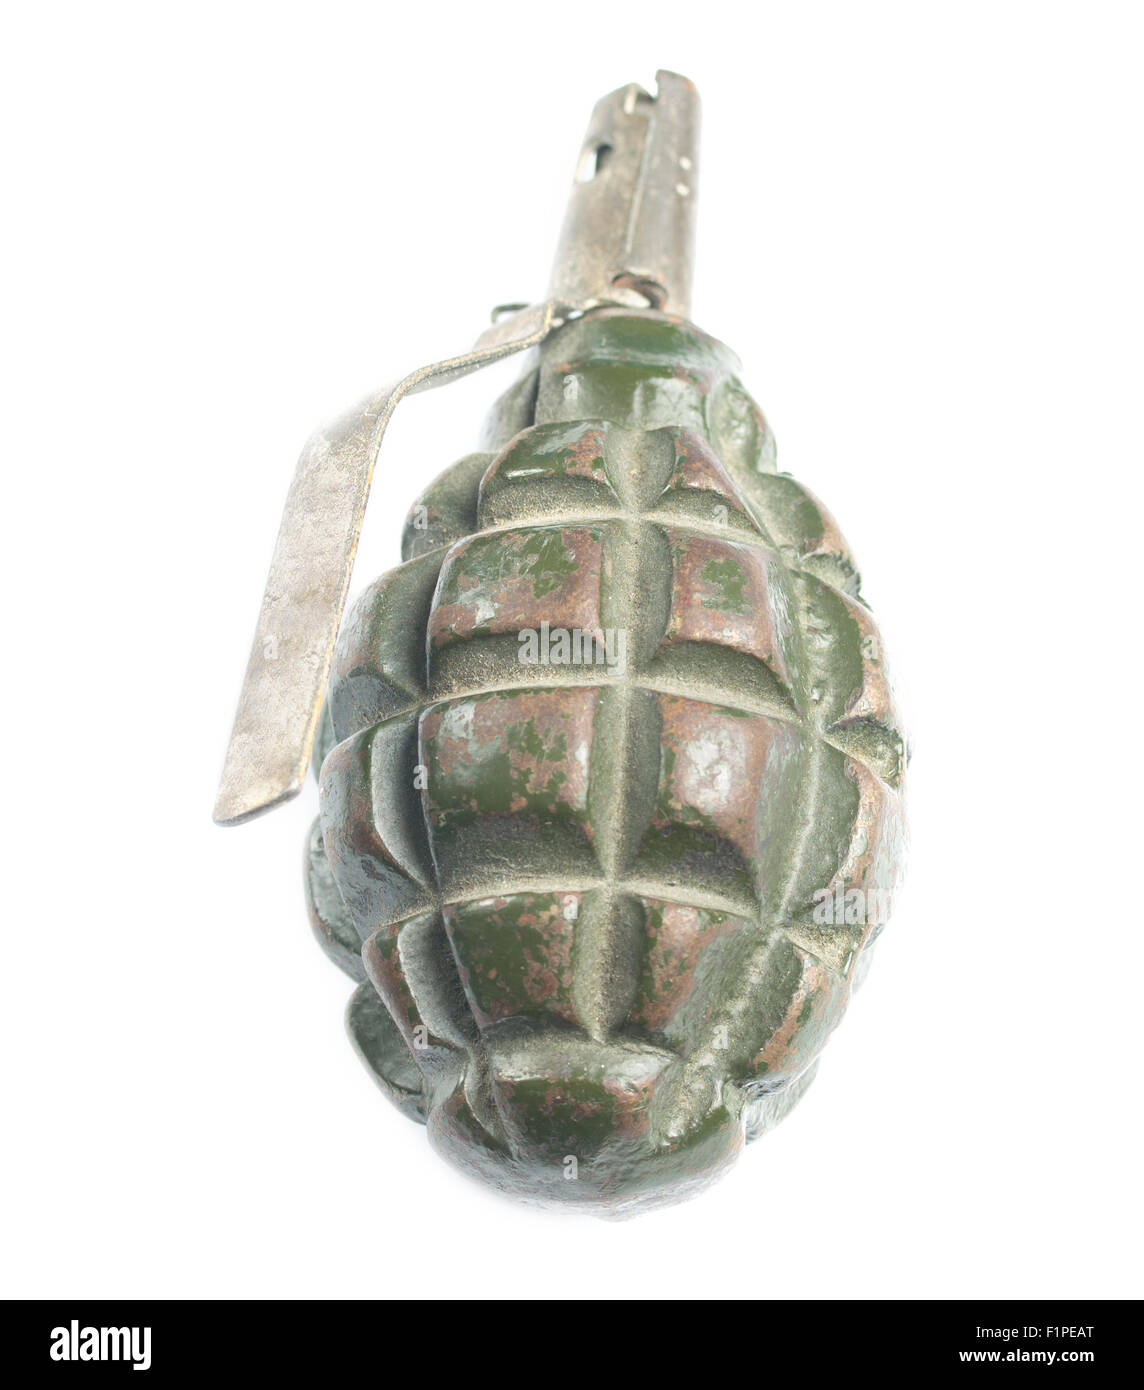 Isolated hand grenade Stock Photo